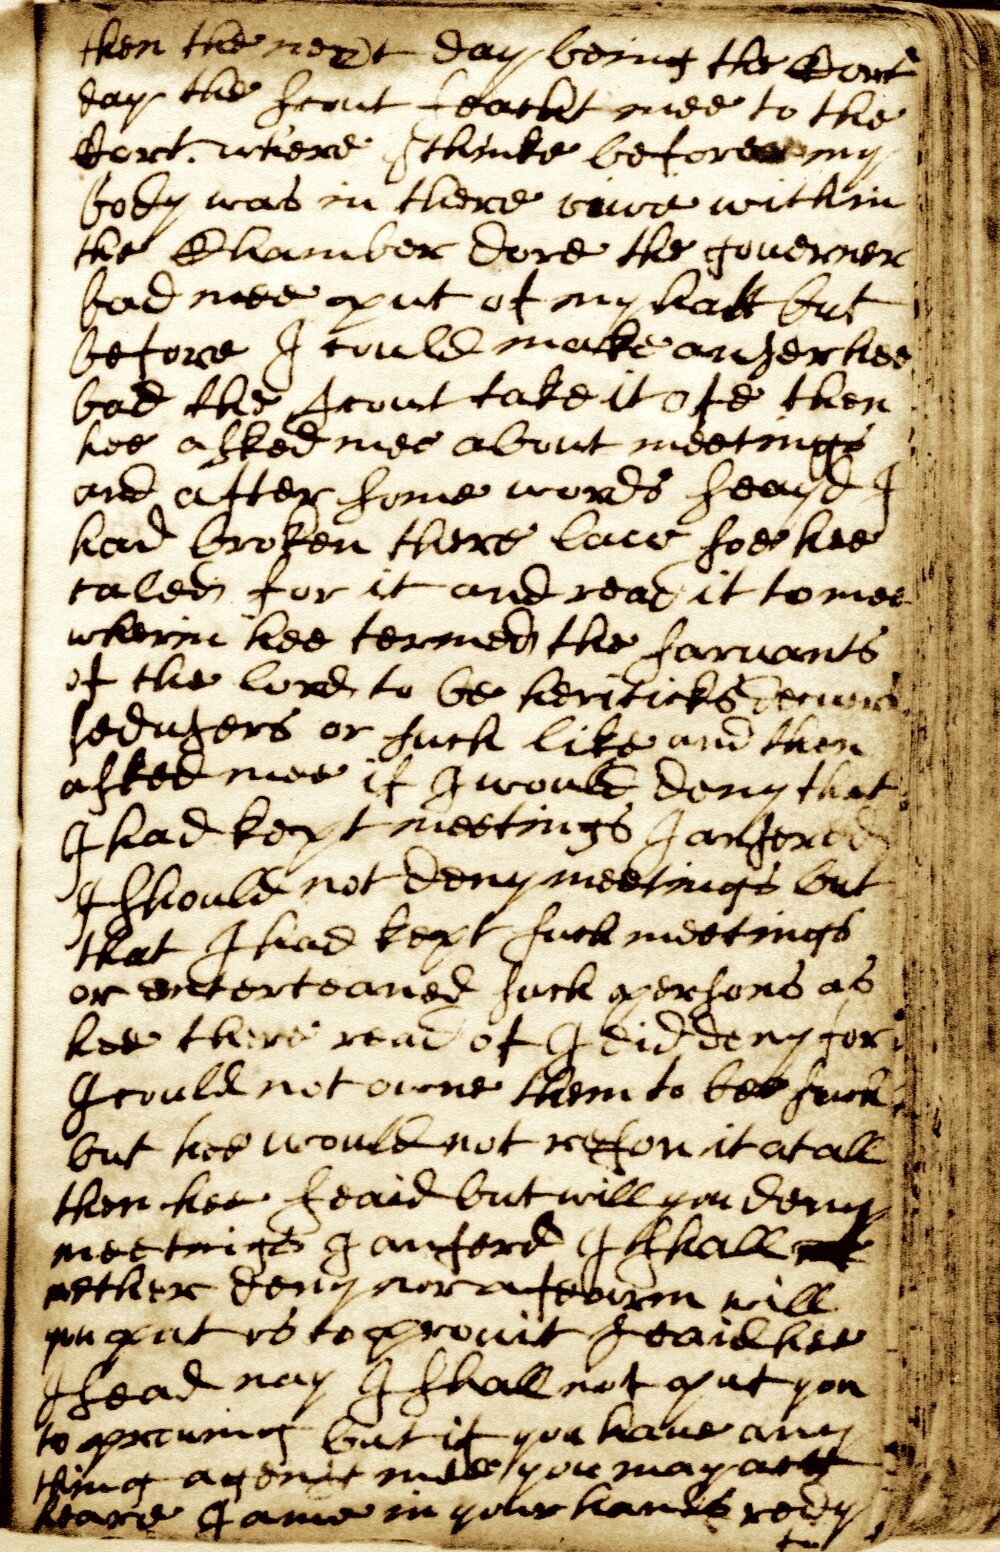 John Bowne's Journal, Folio 50